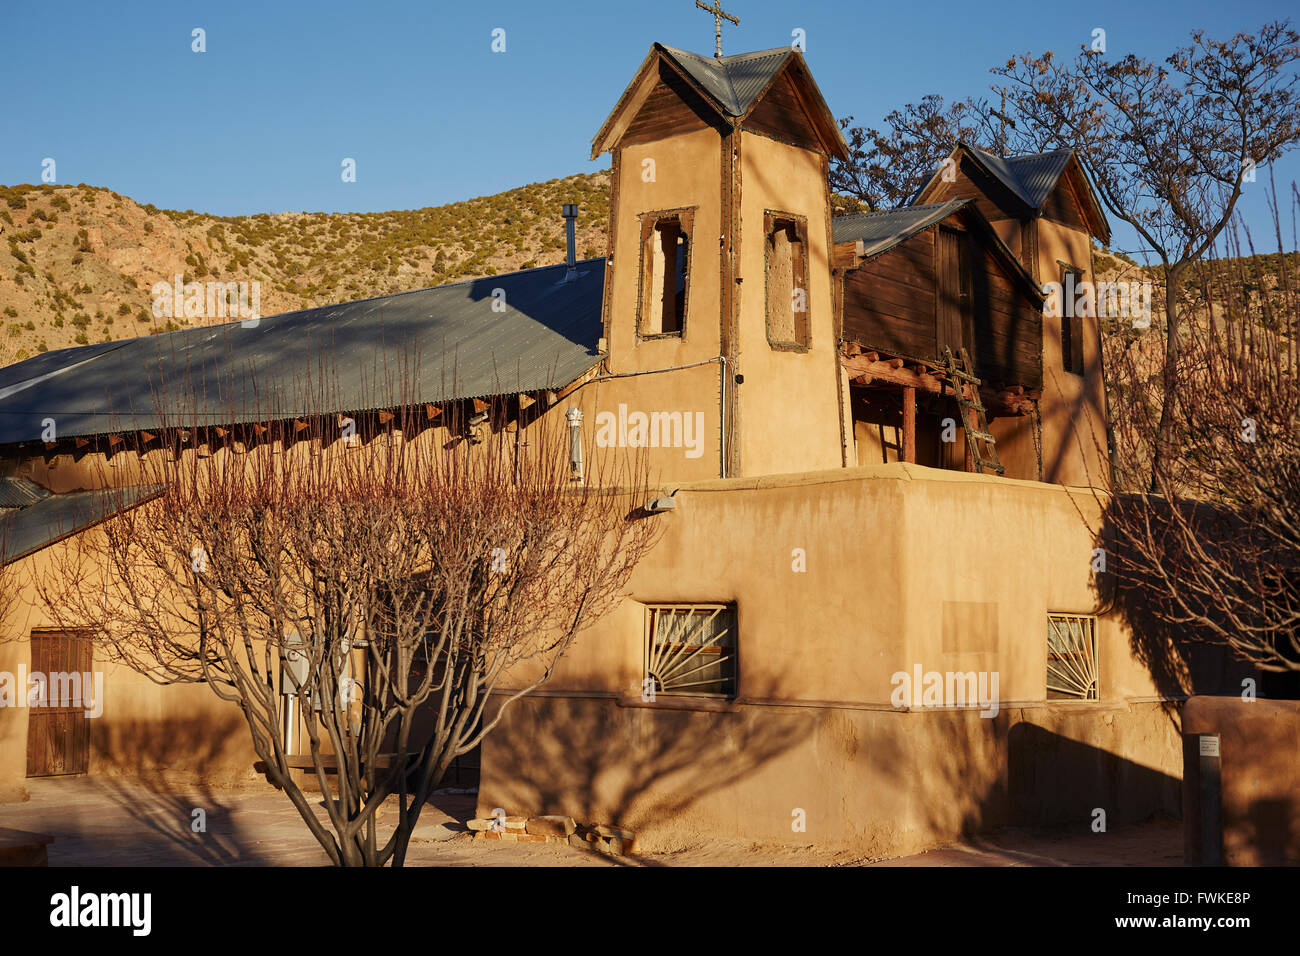 El Santuario de Chimayó et Chimayo, New Mexico, USA Banque D'Images